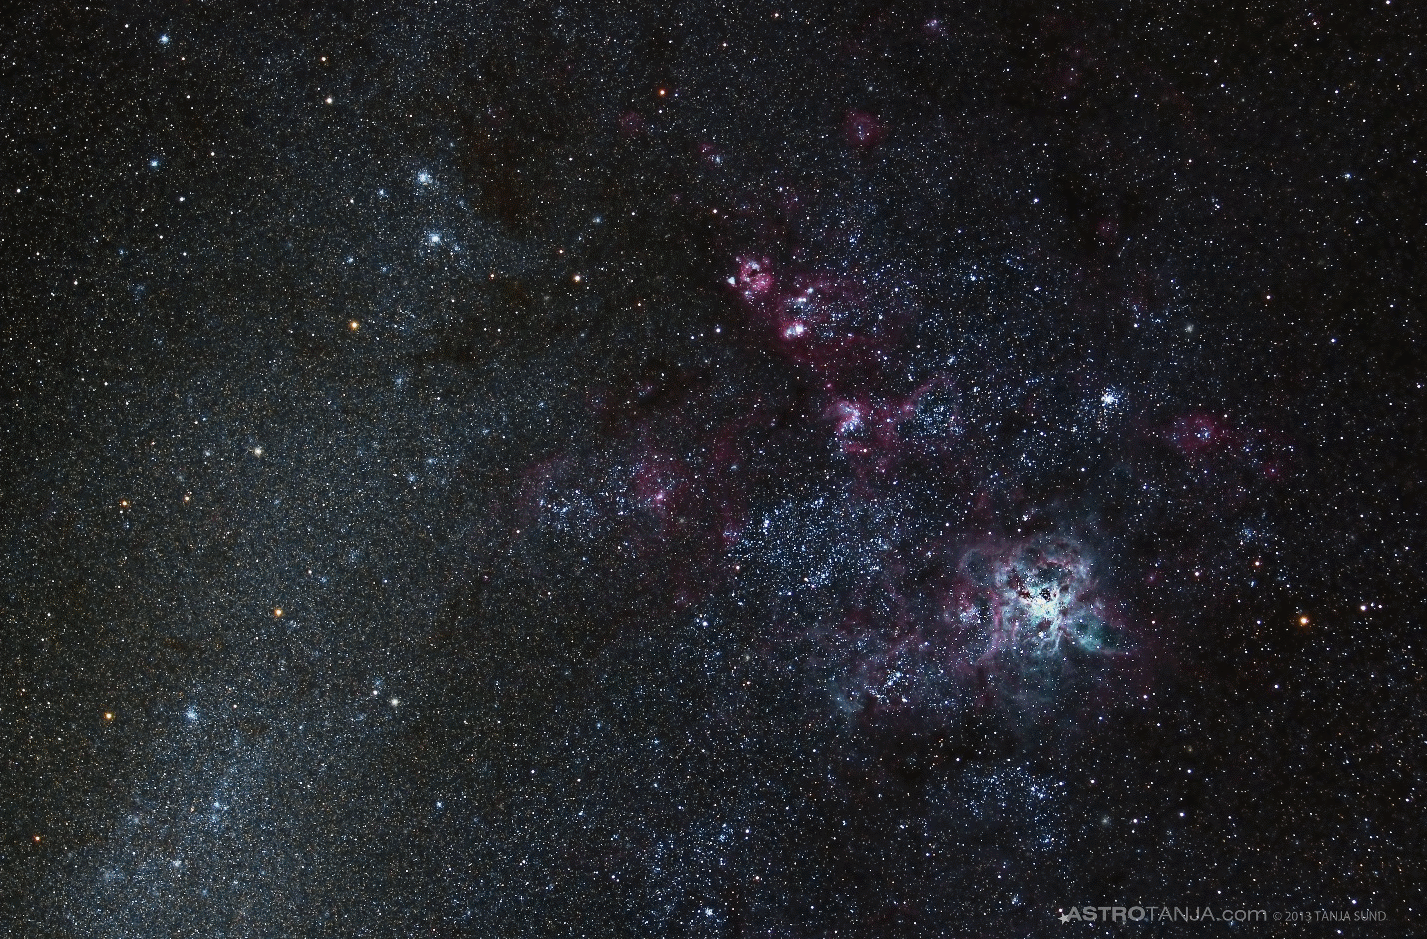 Tarantula Nebula imaged from South Africa by AstroTanja.